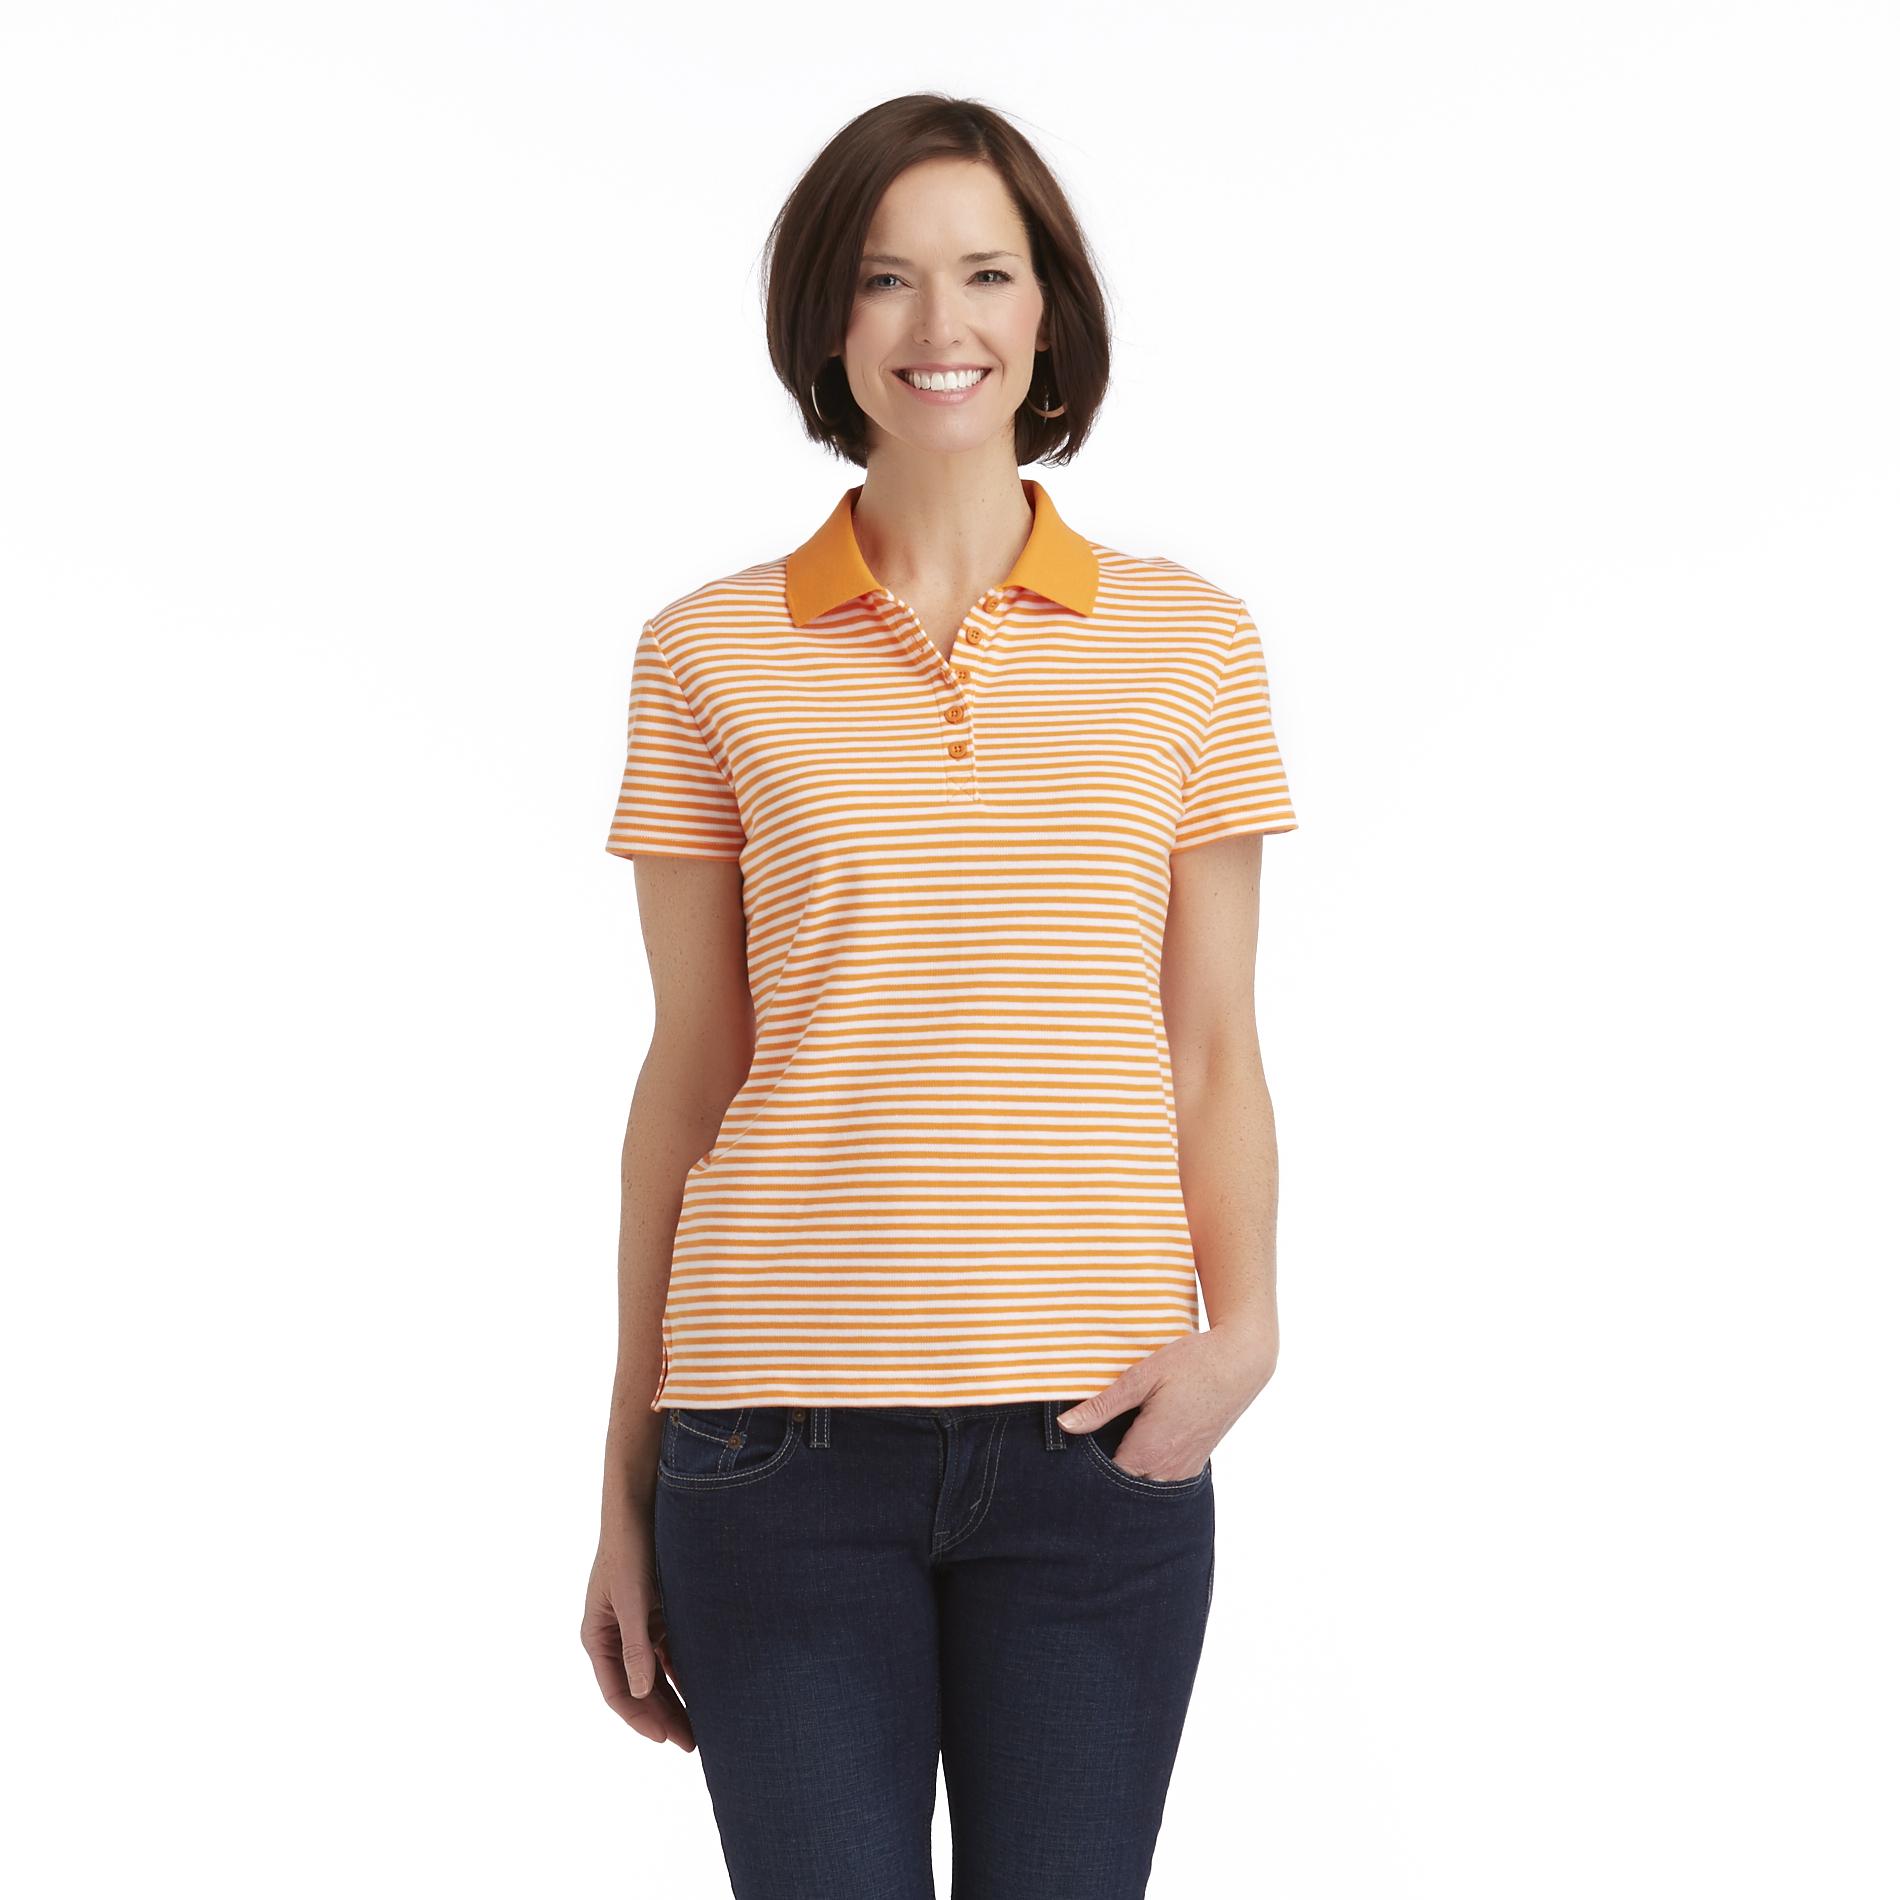 Basic Editions Women's Polo Shirt - Striped